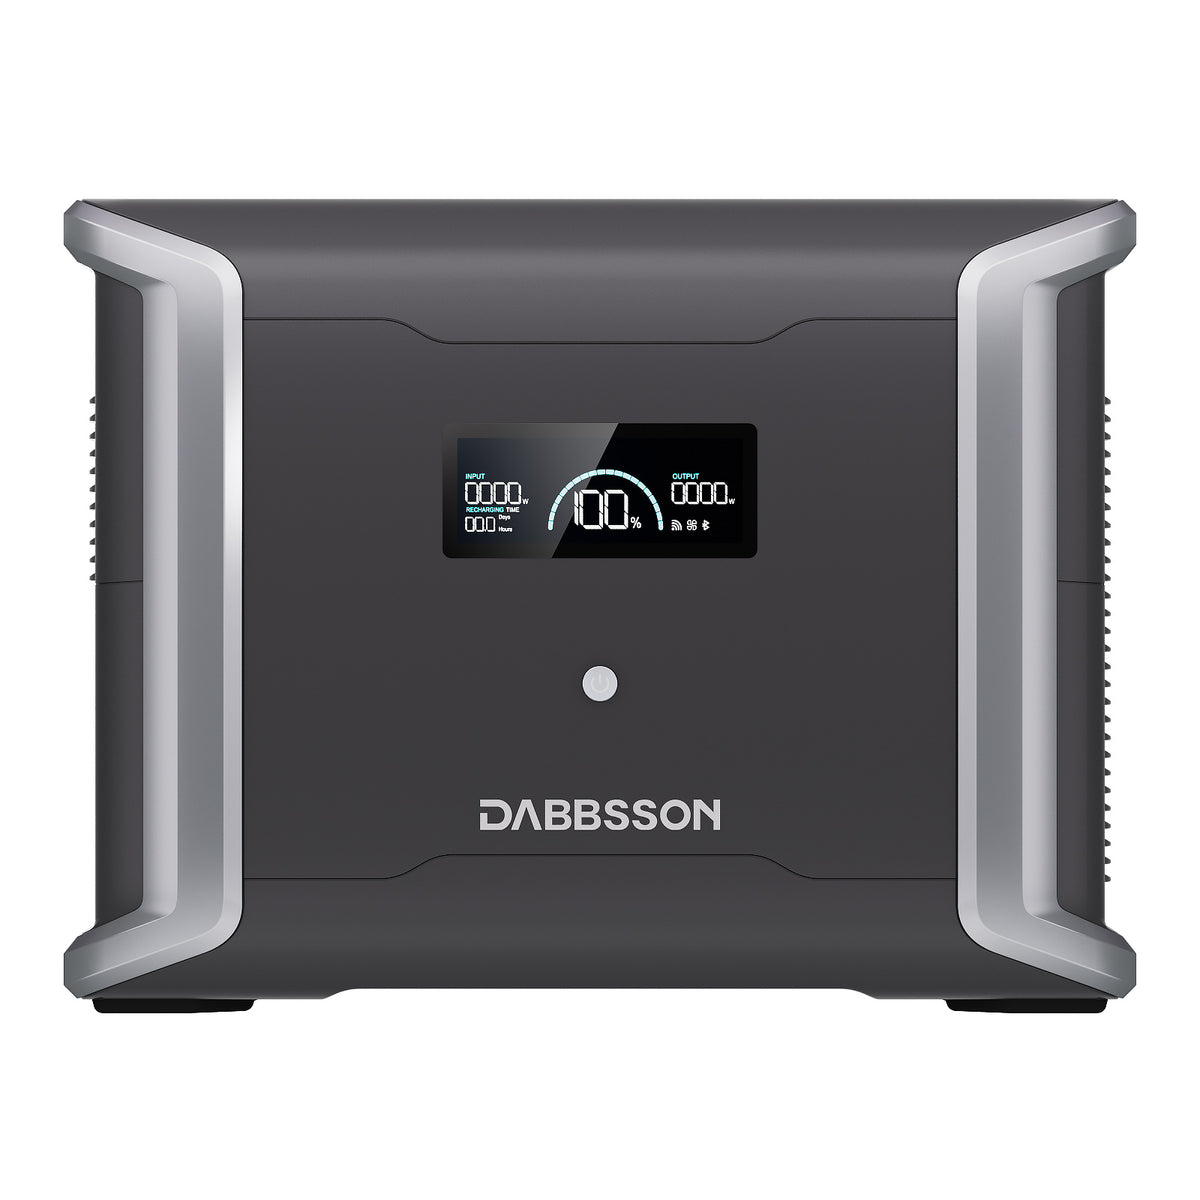 DBS1700B 容量拡張バッテリー DBS1300専用のエクストラバッテリー 1700Wh